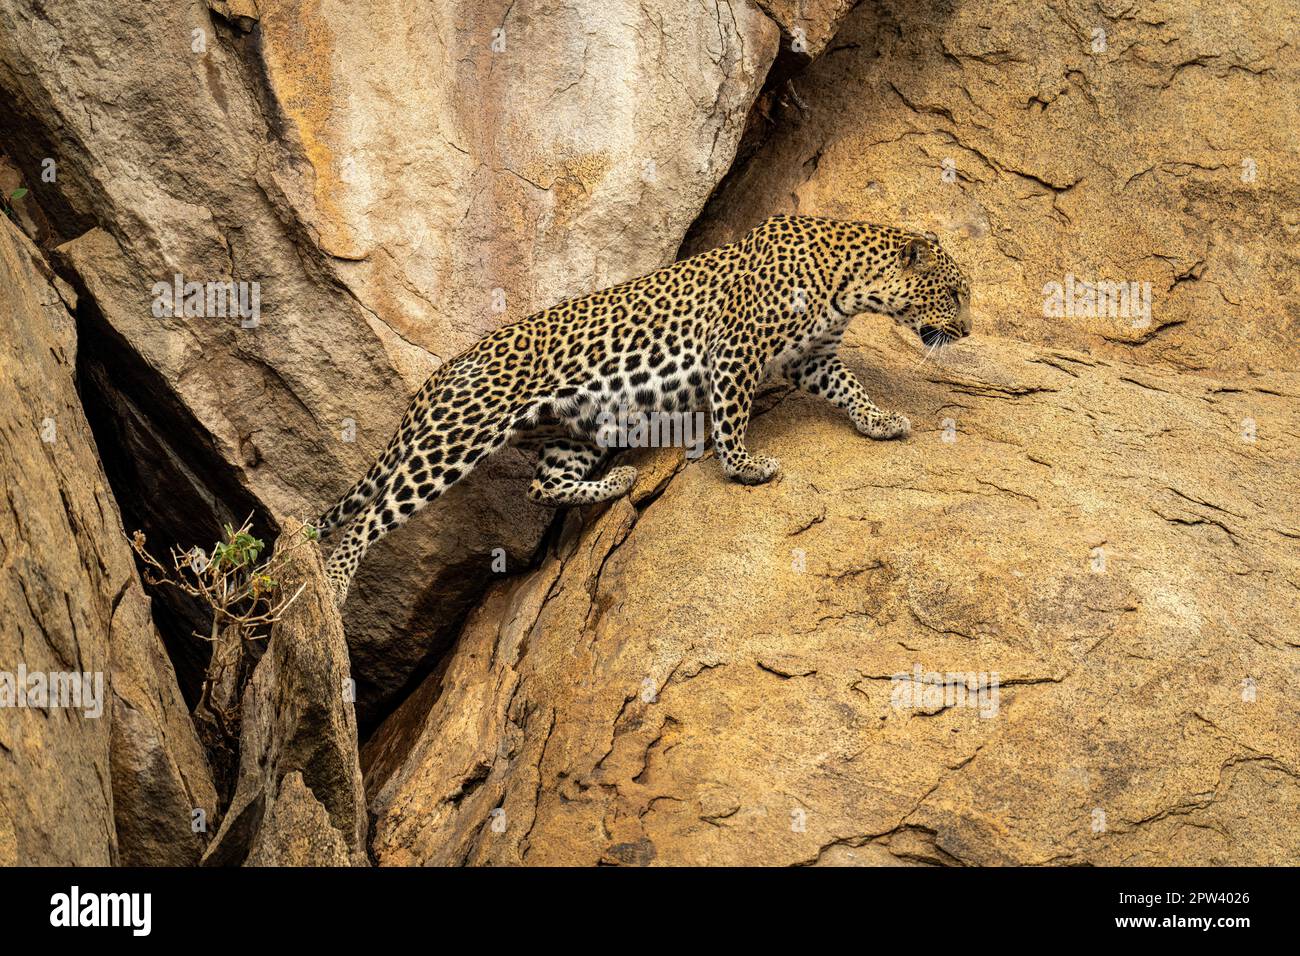 Leopard stretches to cross gap in rocks Stock Photo - Alamy